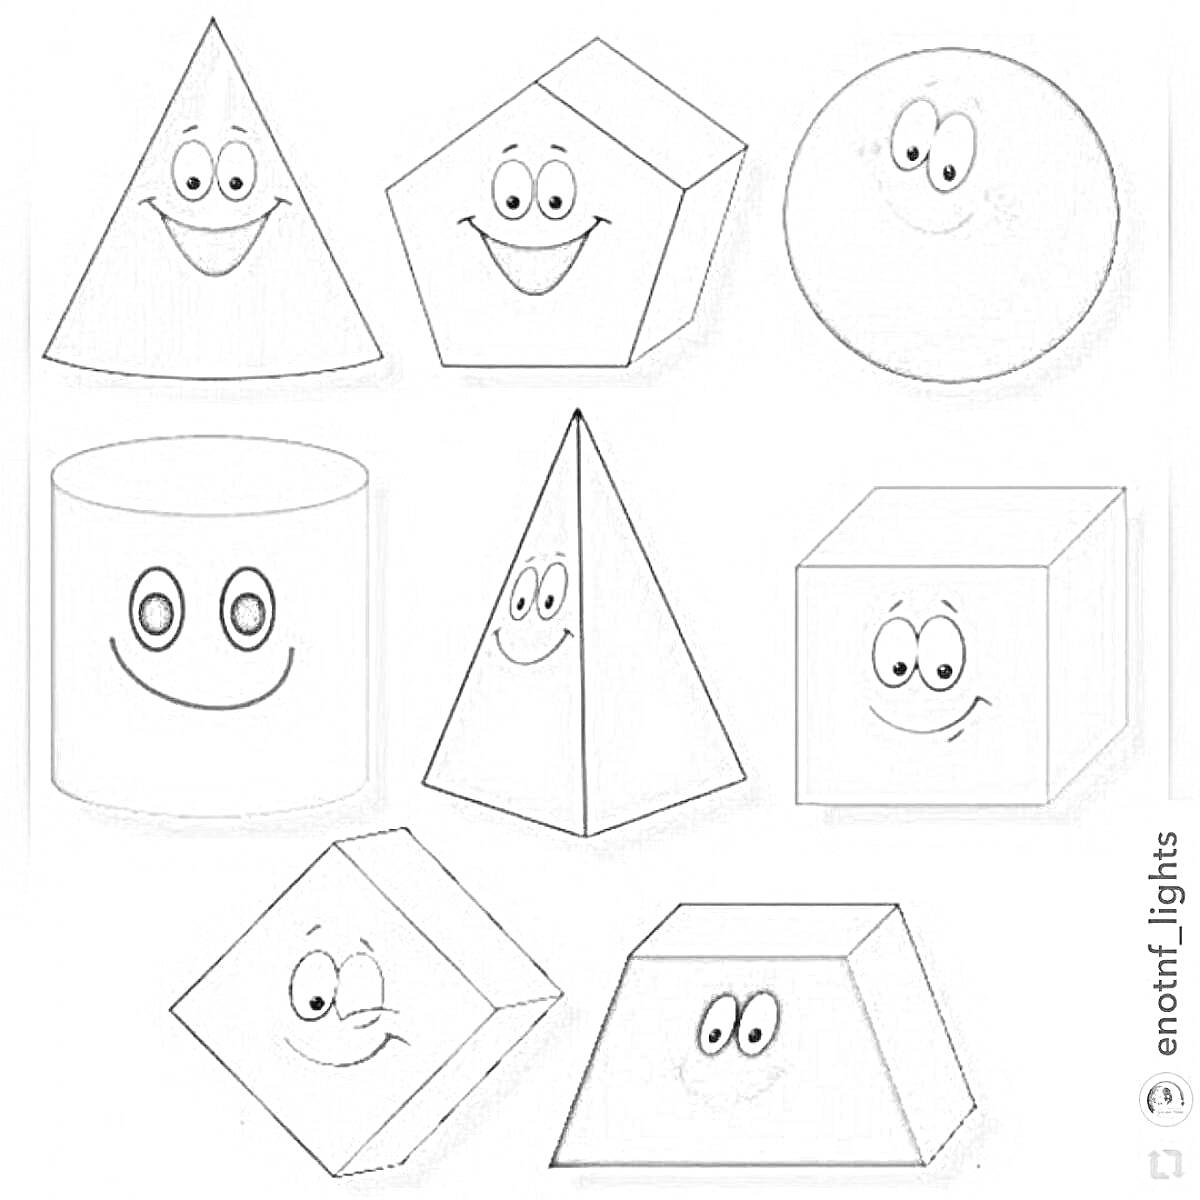 Геометрические фигуры с лицами: пирамида, пятиугольник, сфера, цилиндр, тетраэдр, куб, параллелограмм, прямоугольник